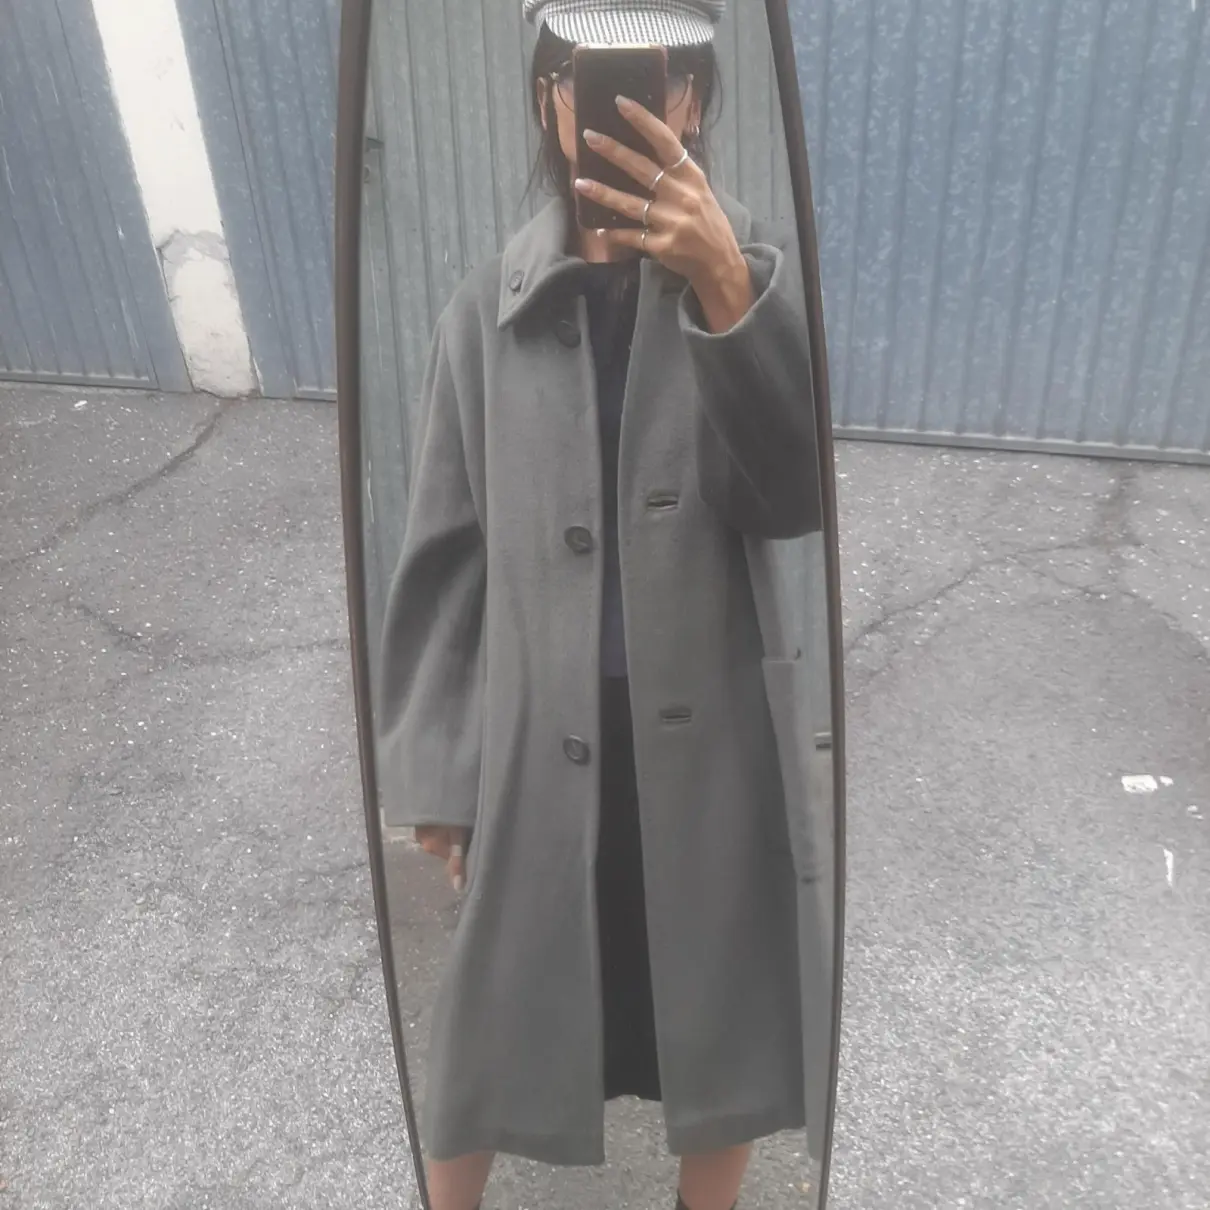 Cashmere coat Max Mara